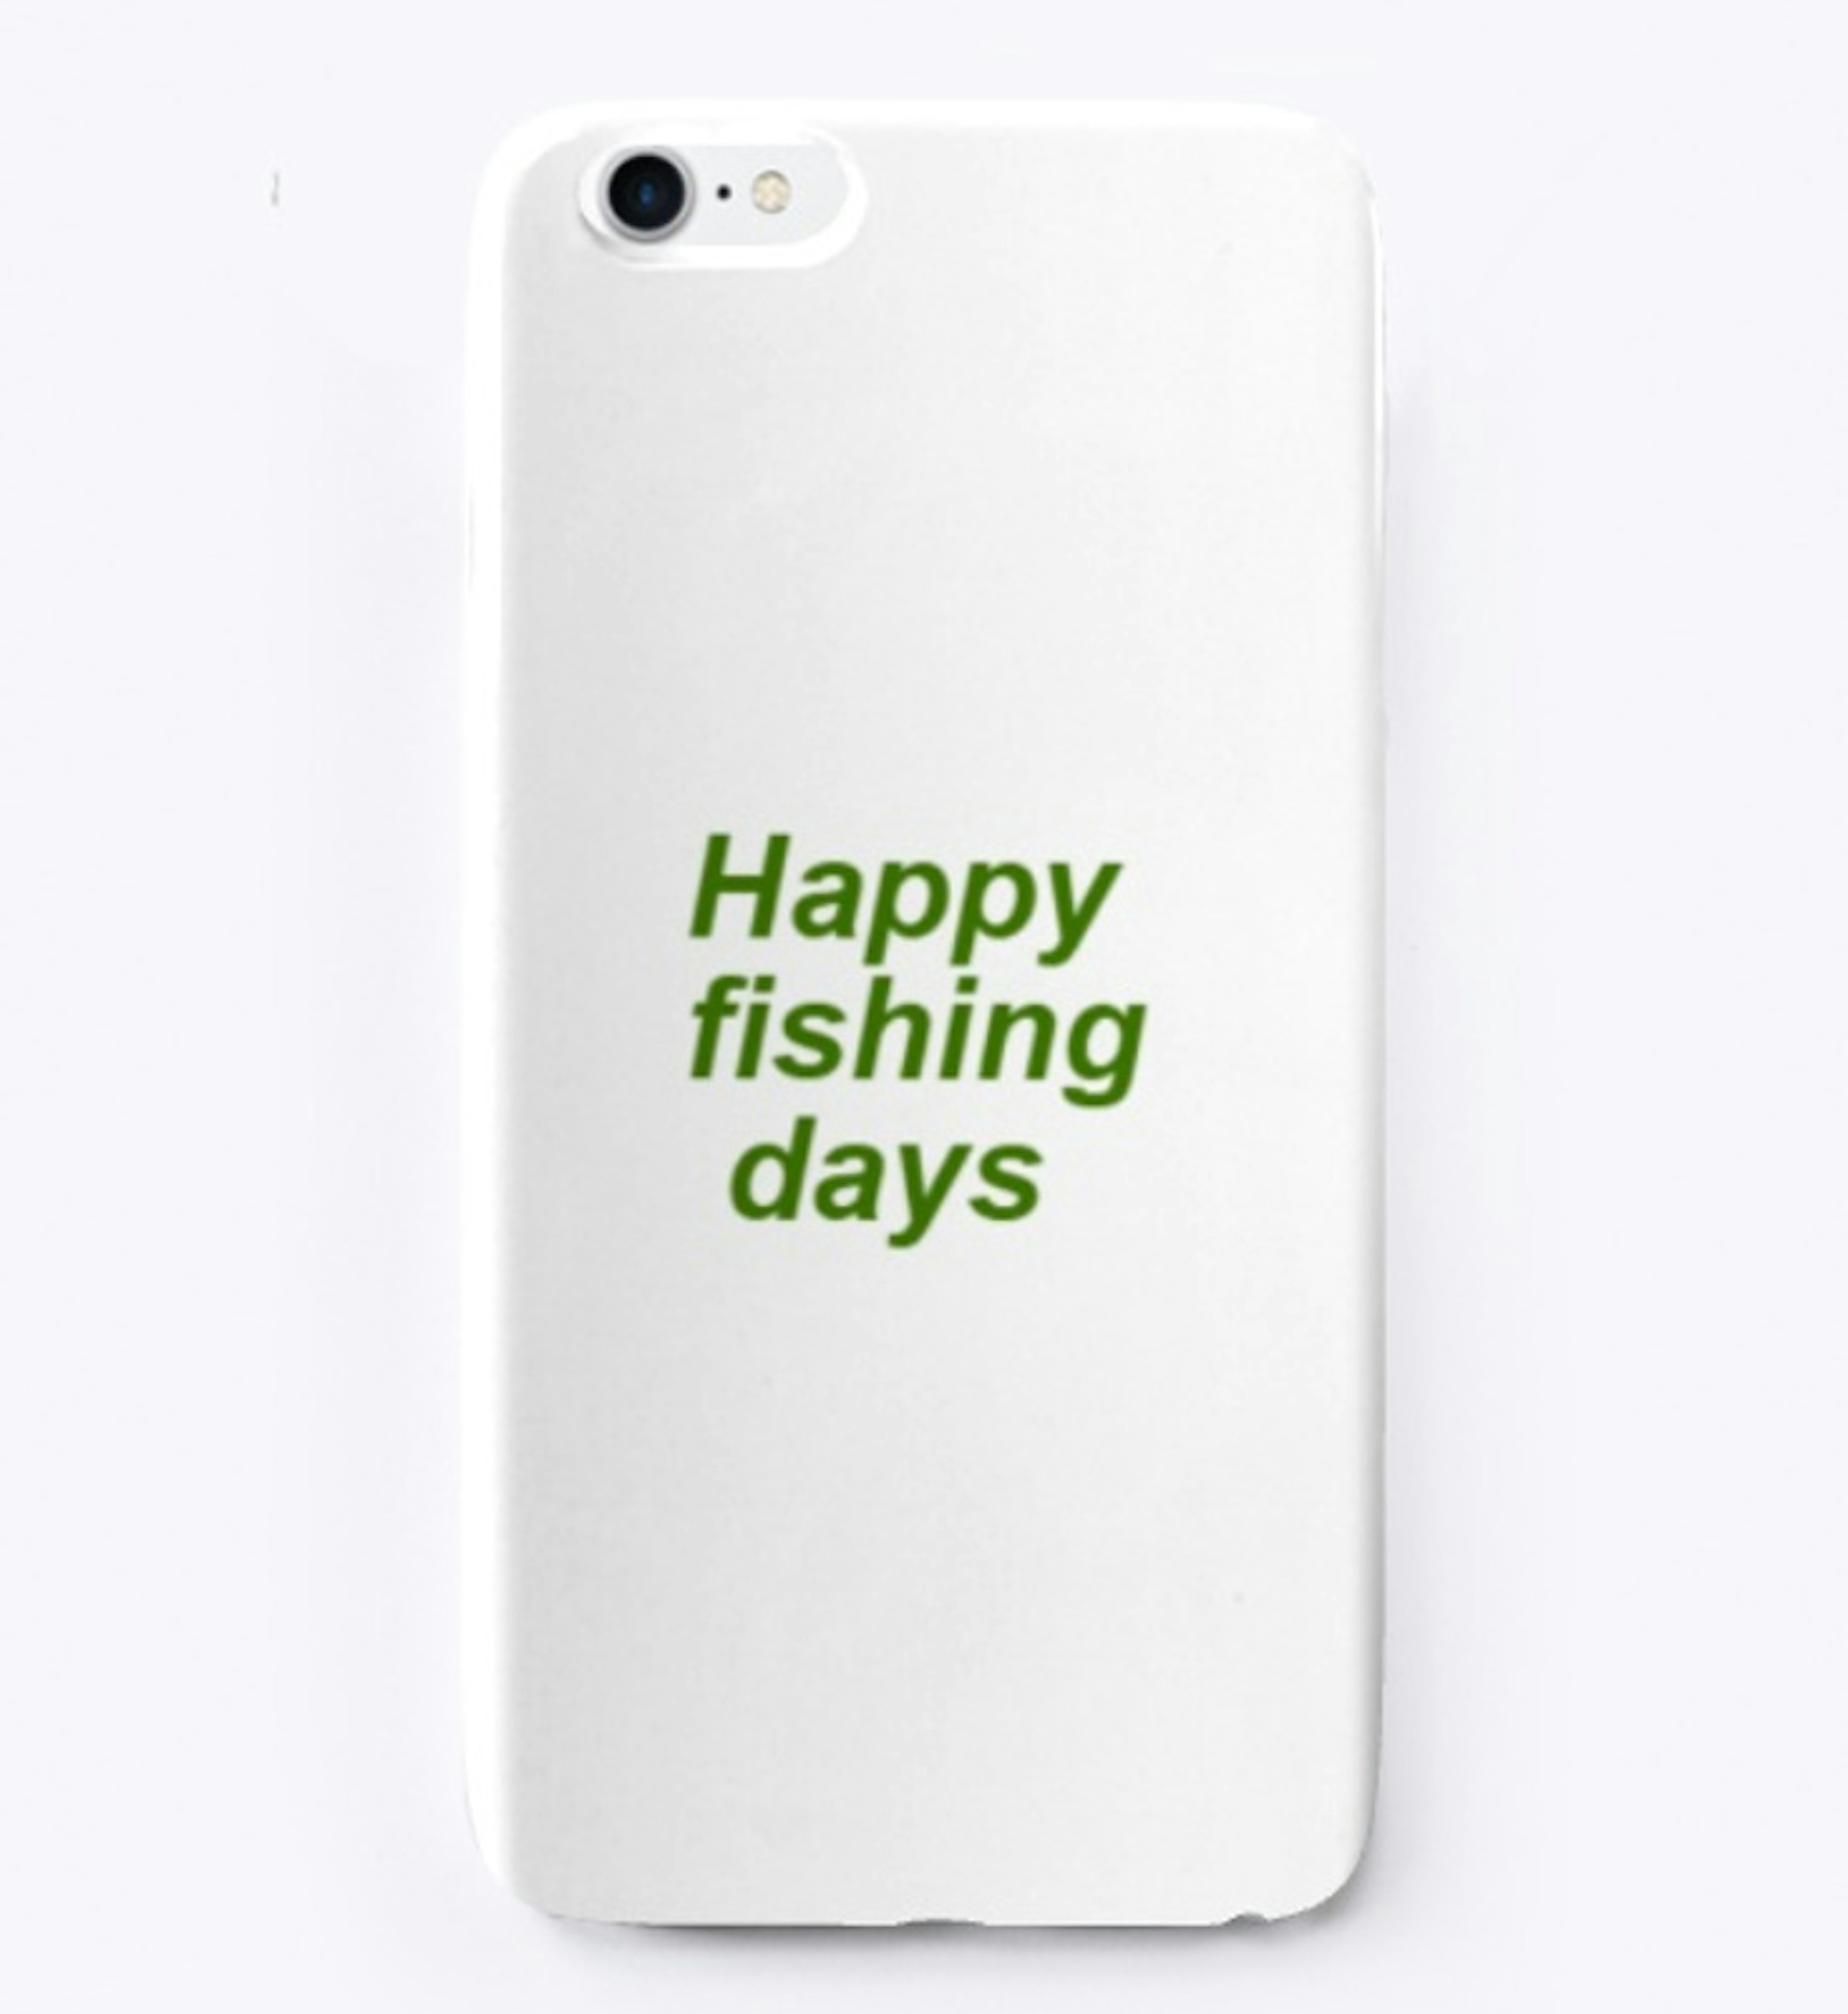 Happy fishing days